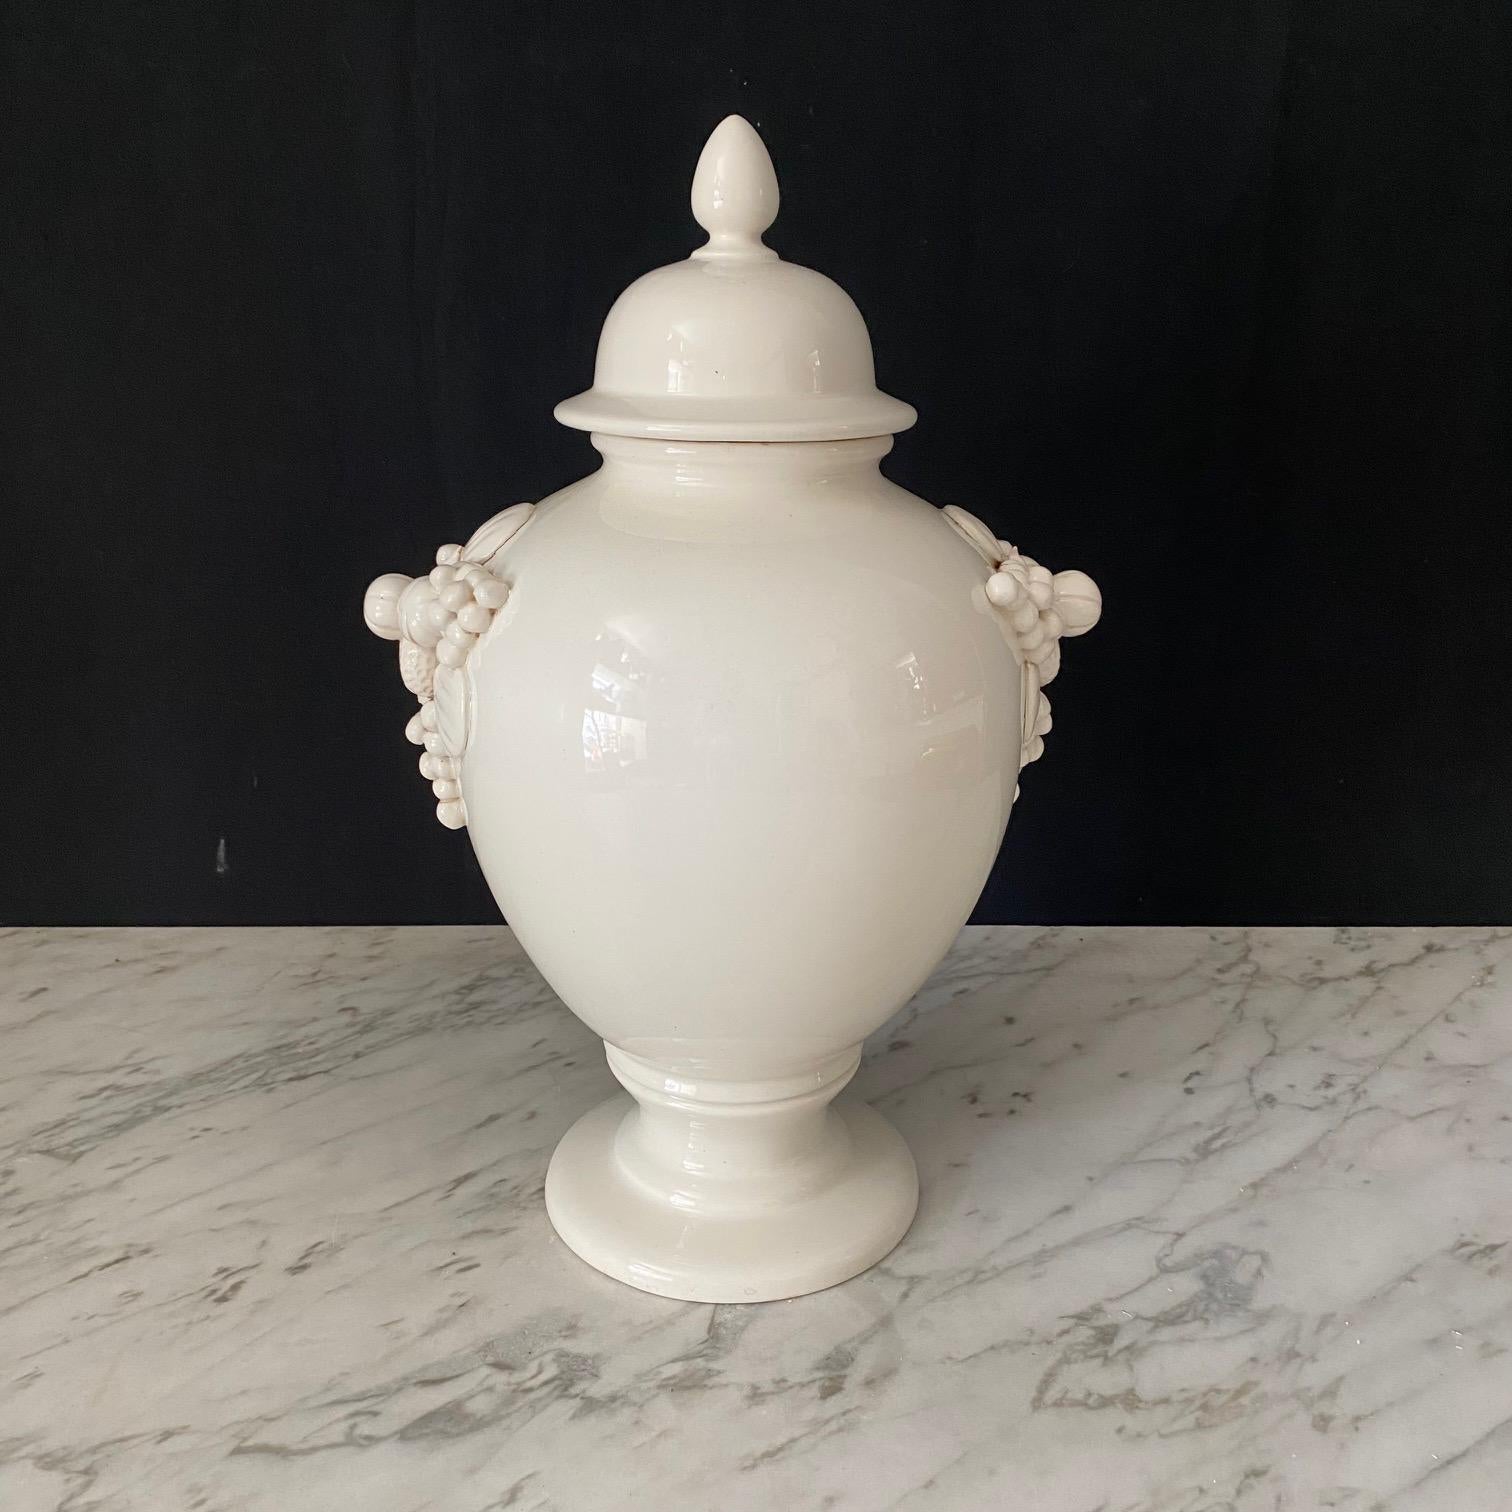  Large Antique Italian Pair of White Ceramic Apothecary Style Urn Vases  4